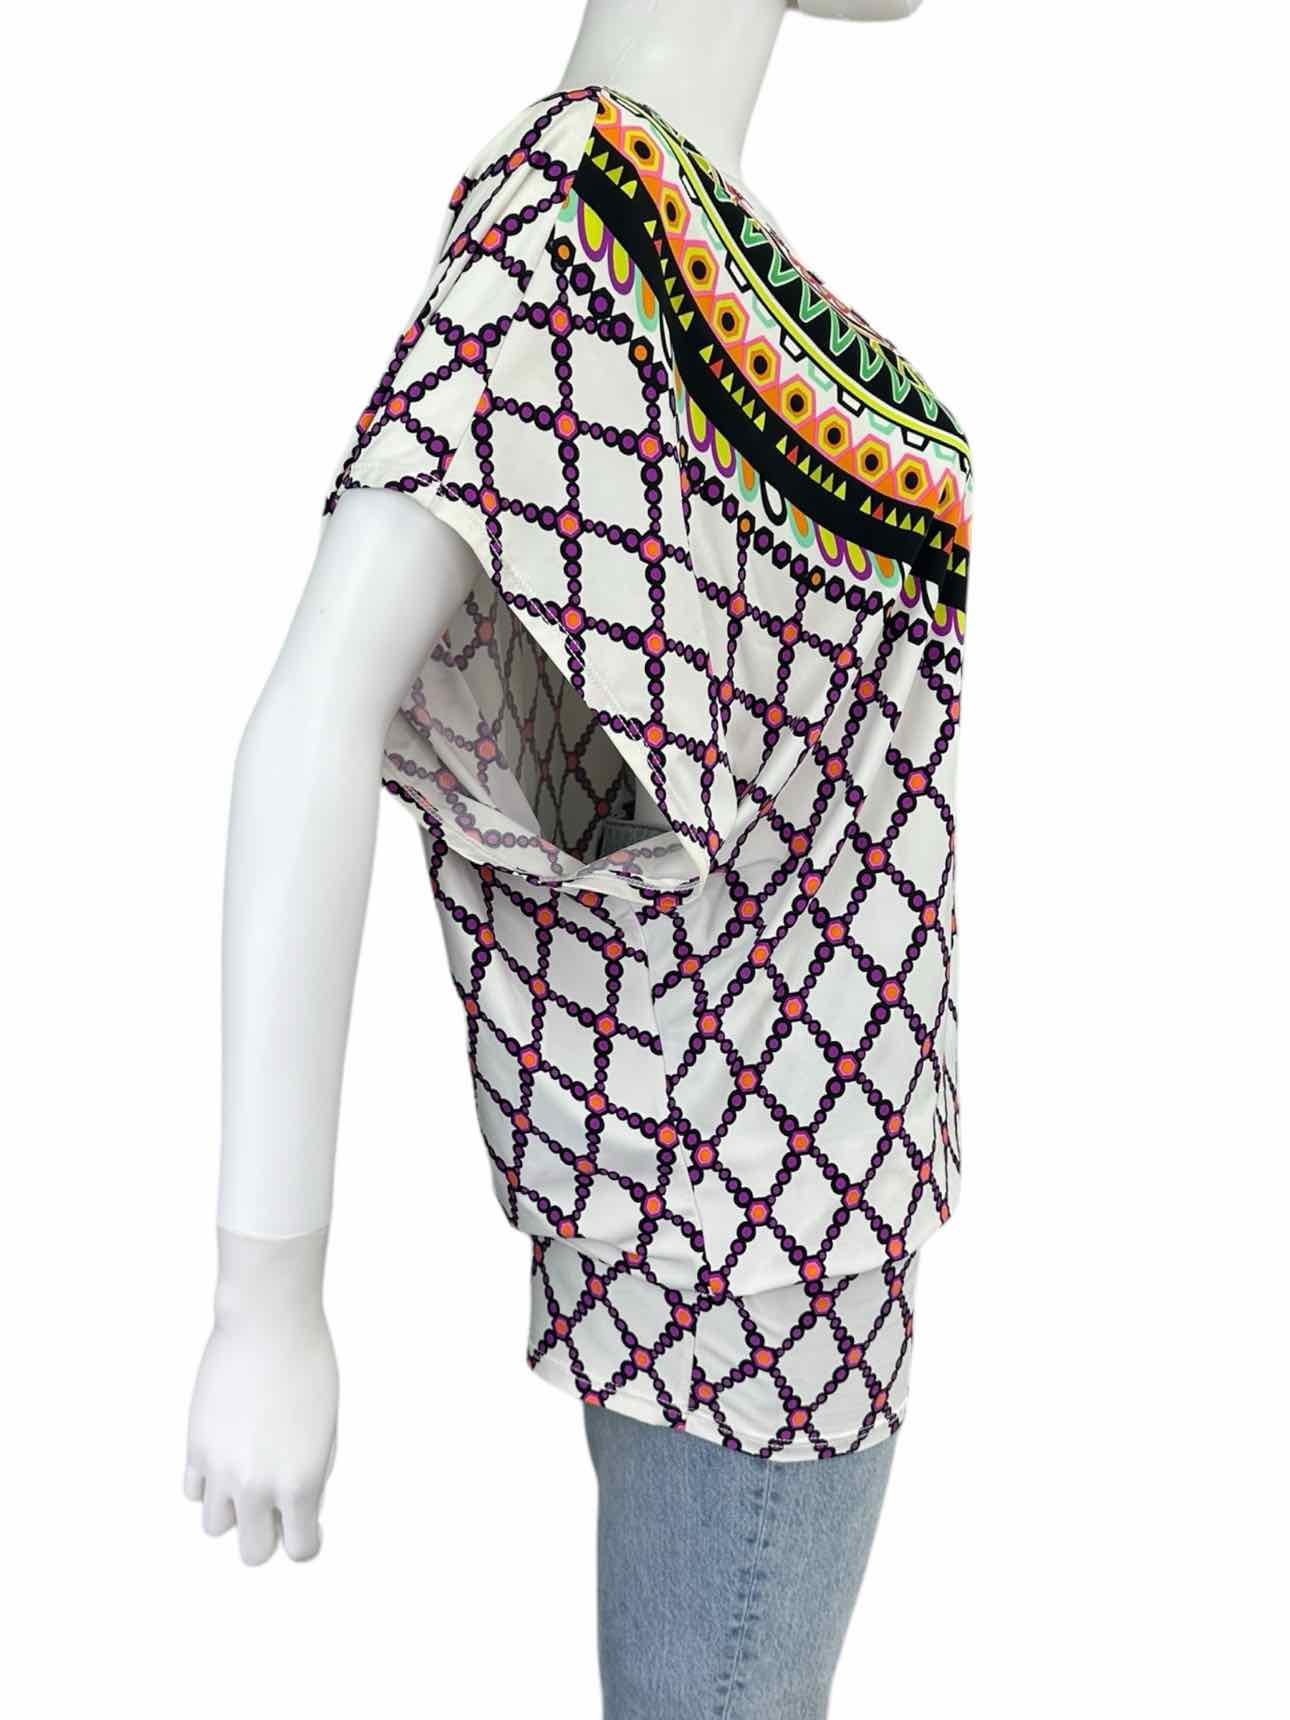 TRINA TURK Multi-colored Knit Top Size L